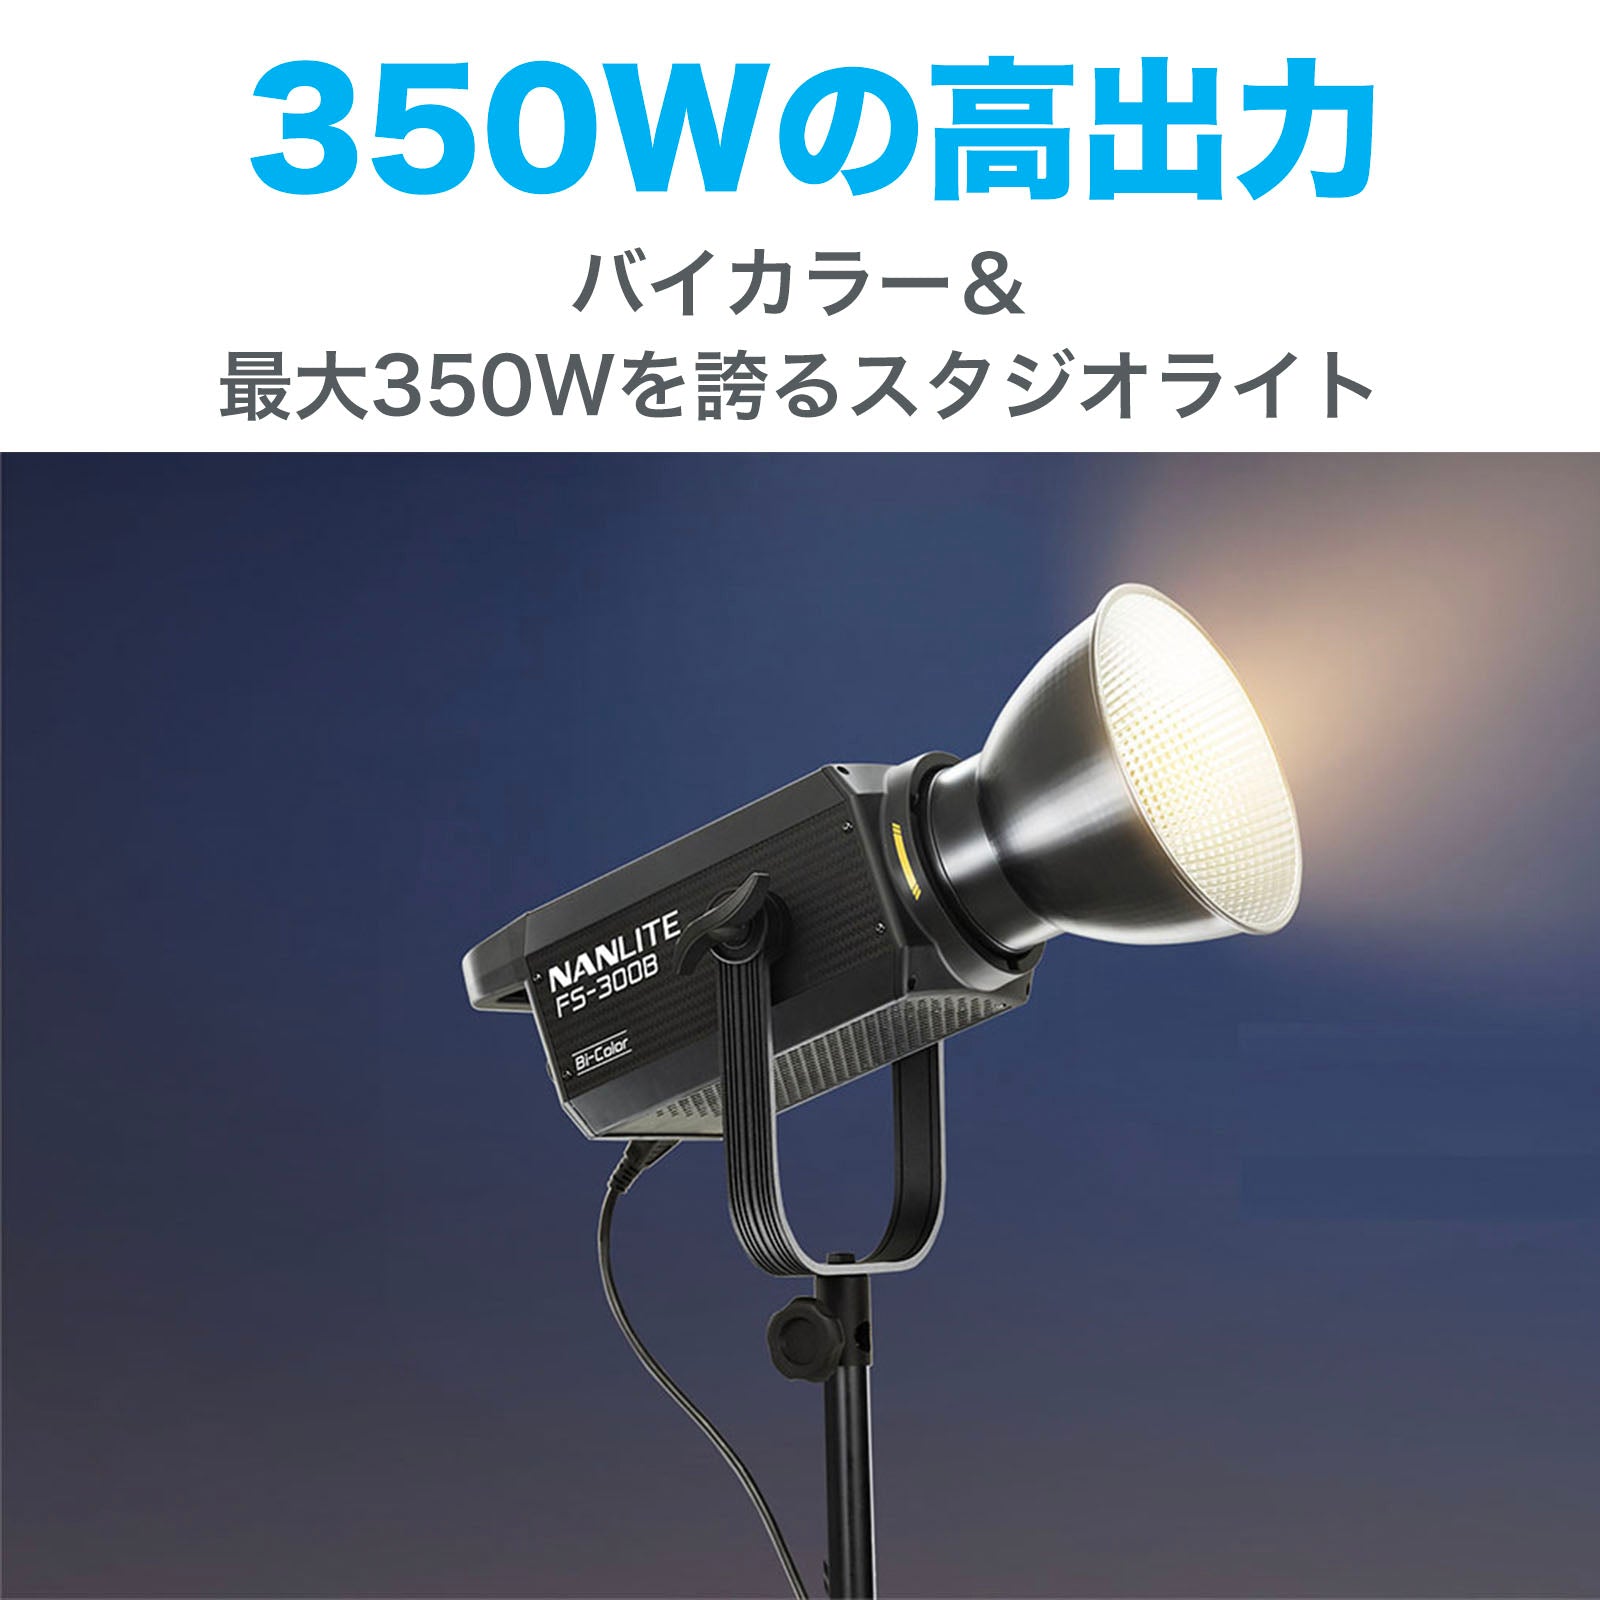 nanlite fs-300B　LED照明